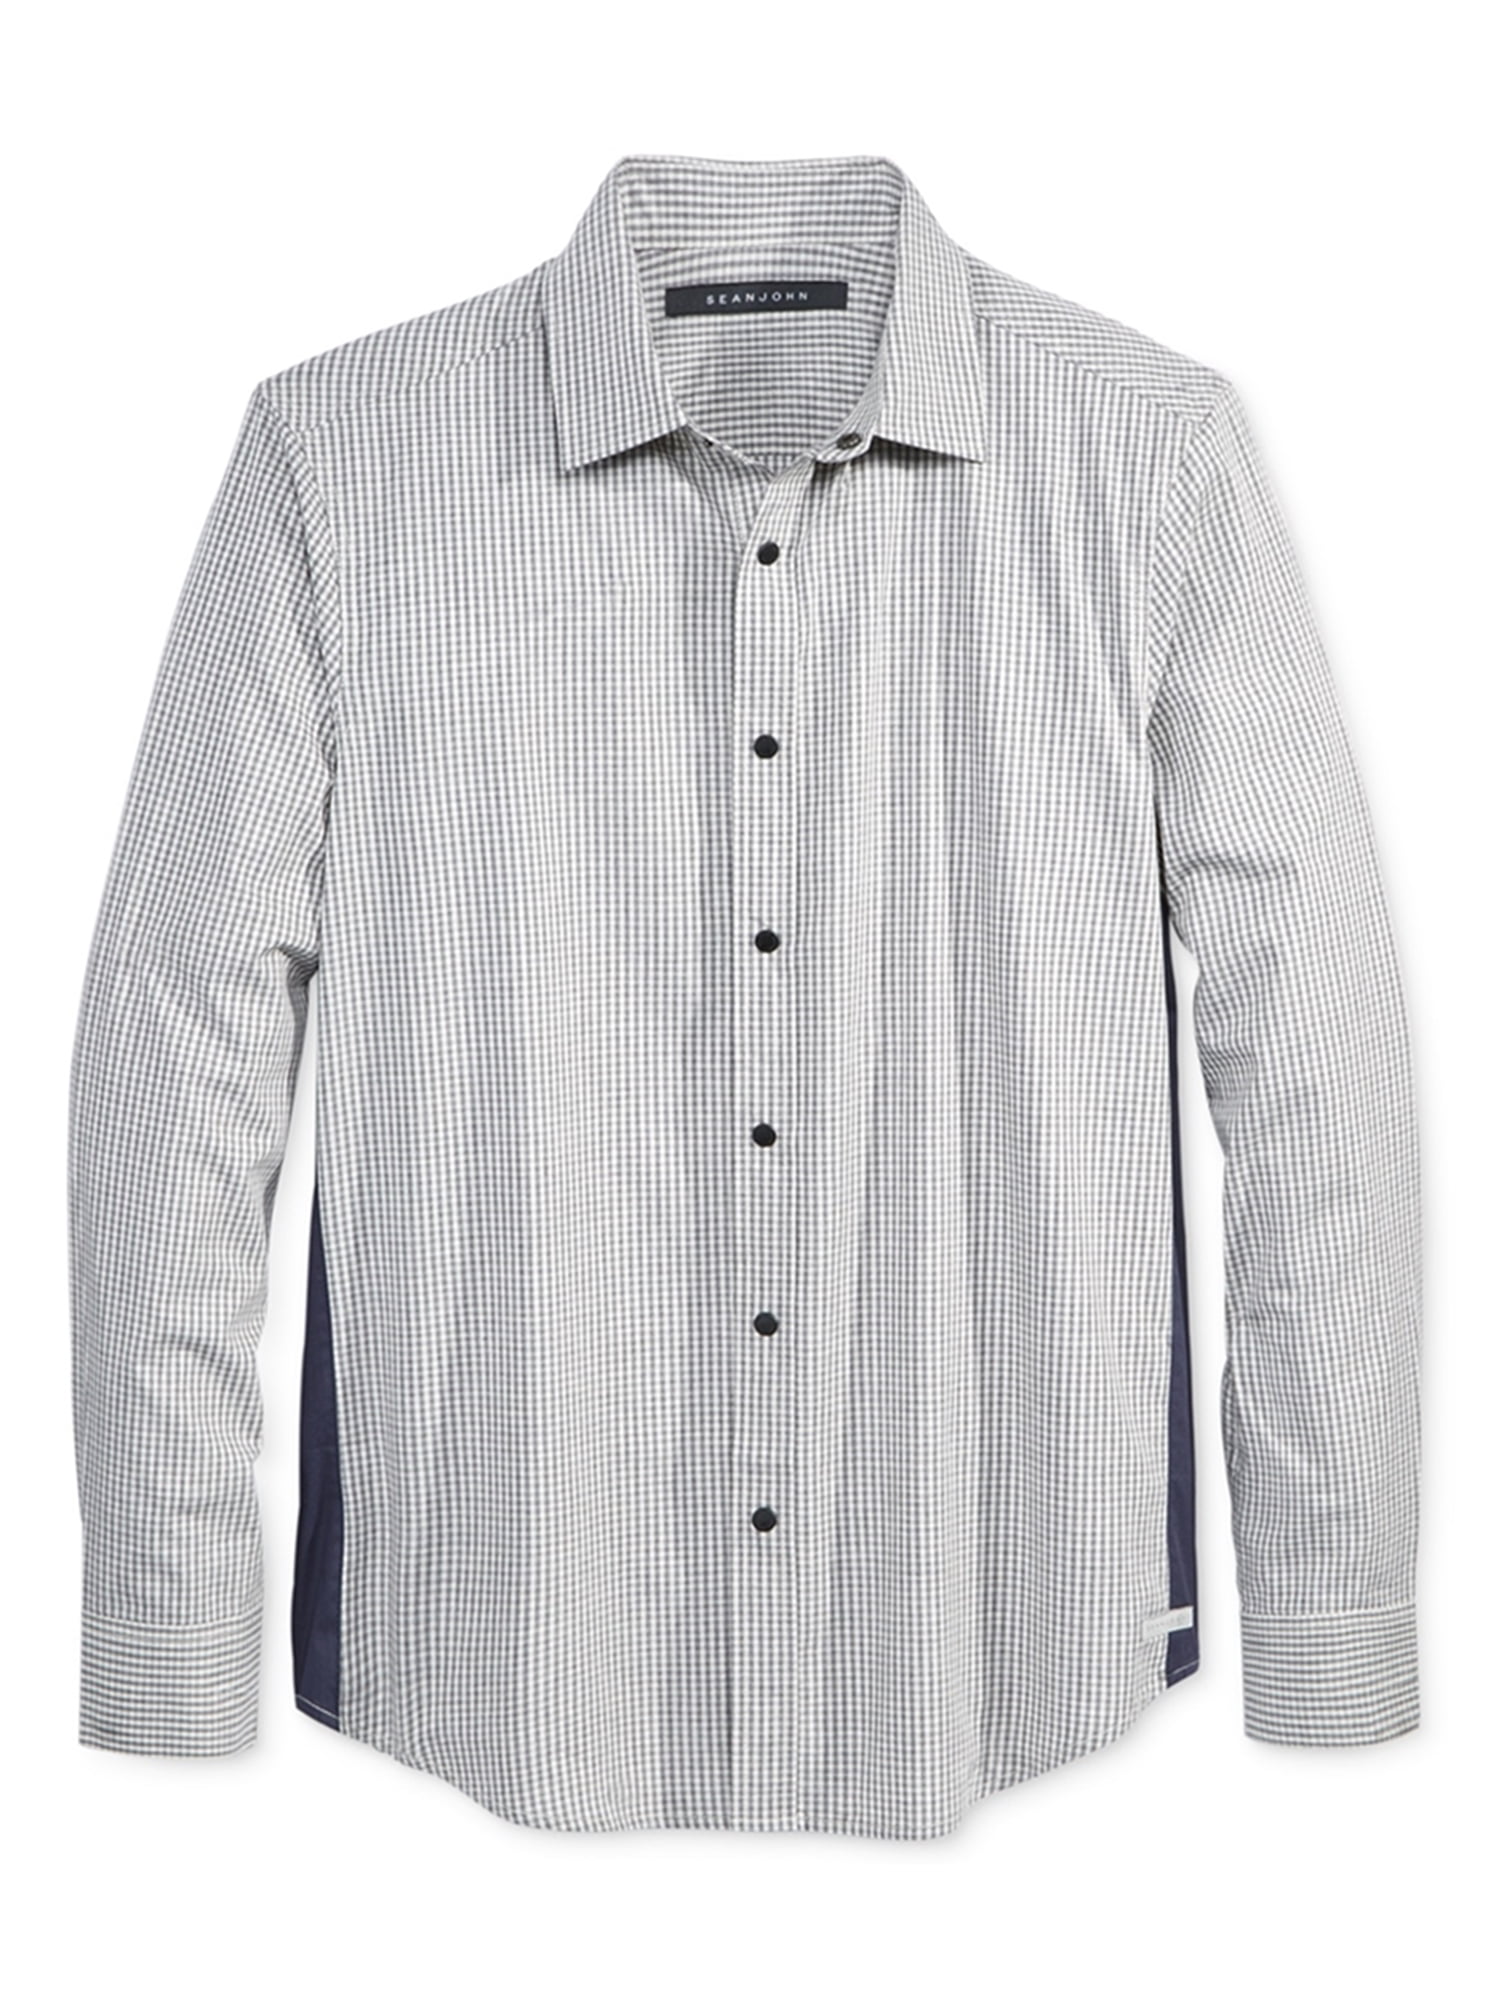 Sean John Mens Side Detail Button Up Shirt mediumgreyheather XL ...